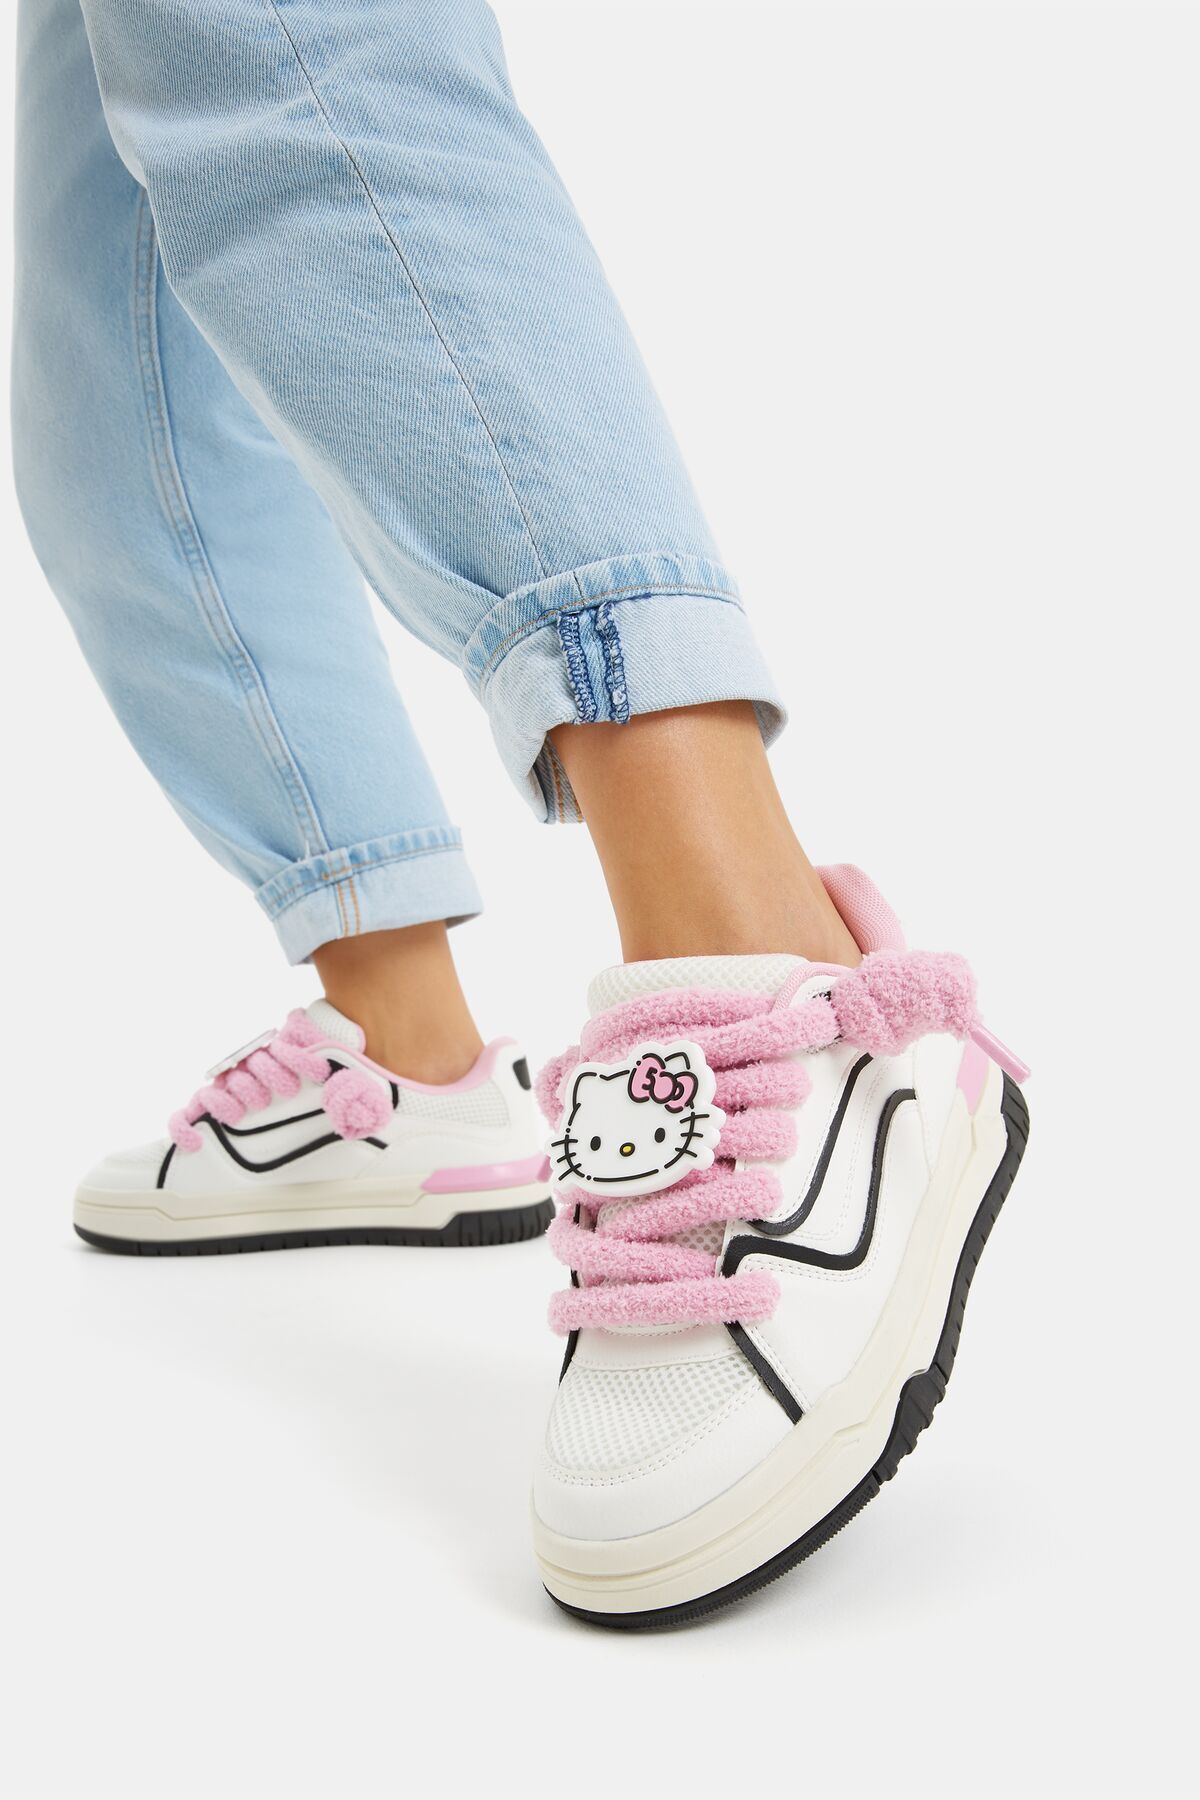 Bershka Hello Kitty Mania skater spor ayakkabı